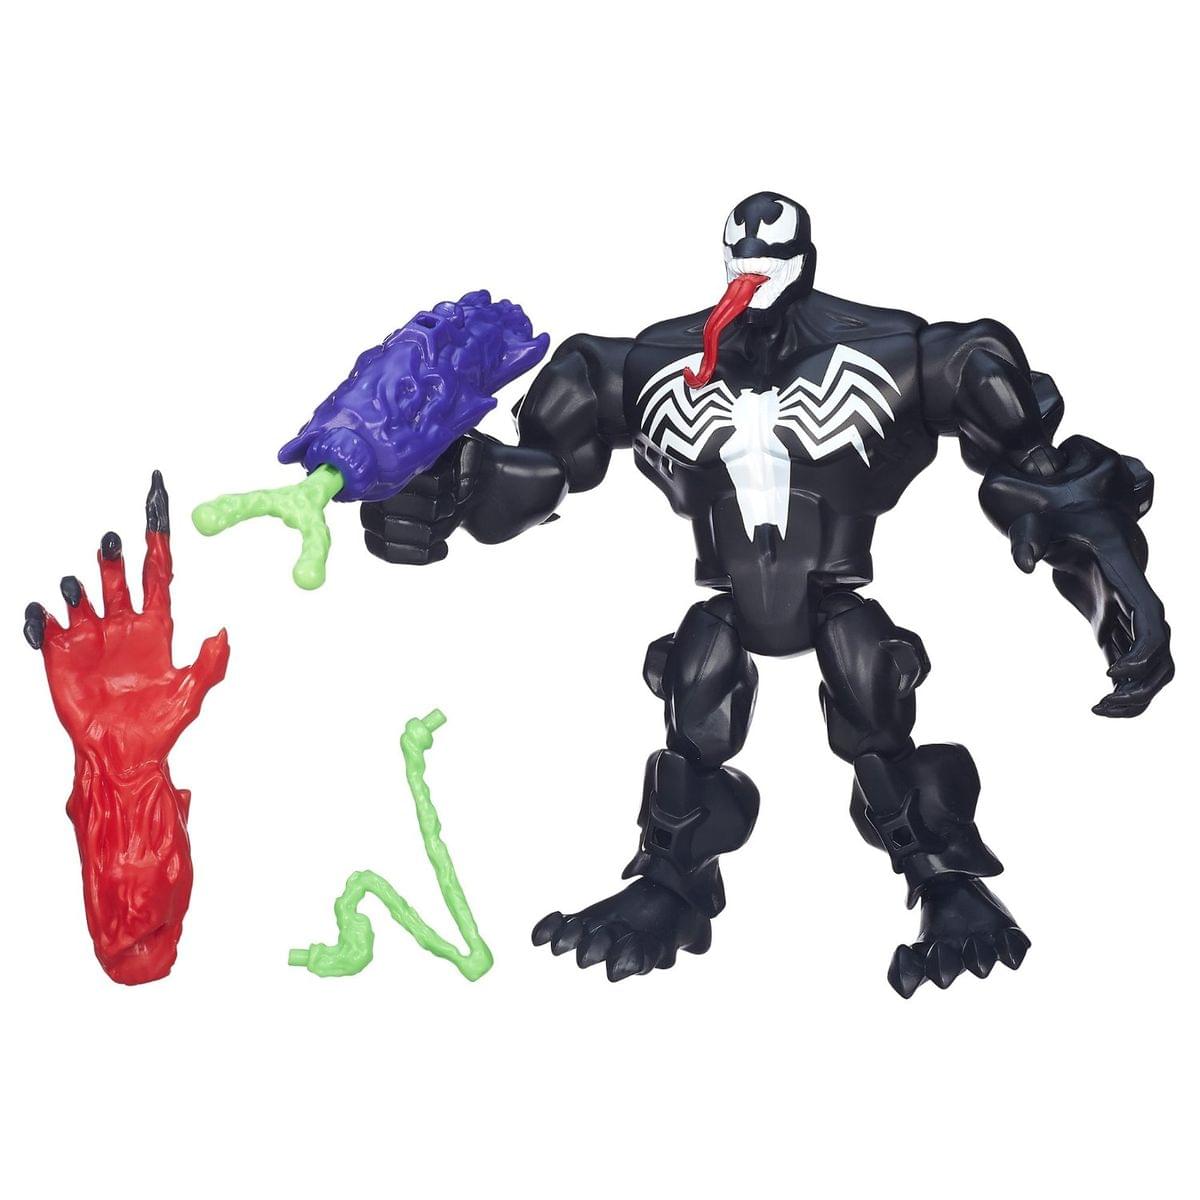 Marvel Super Hero Mashers 6" Action Figure: Venom